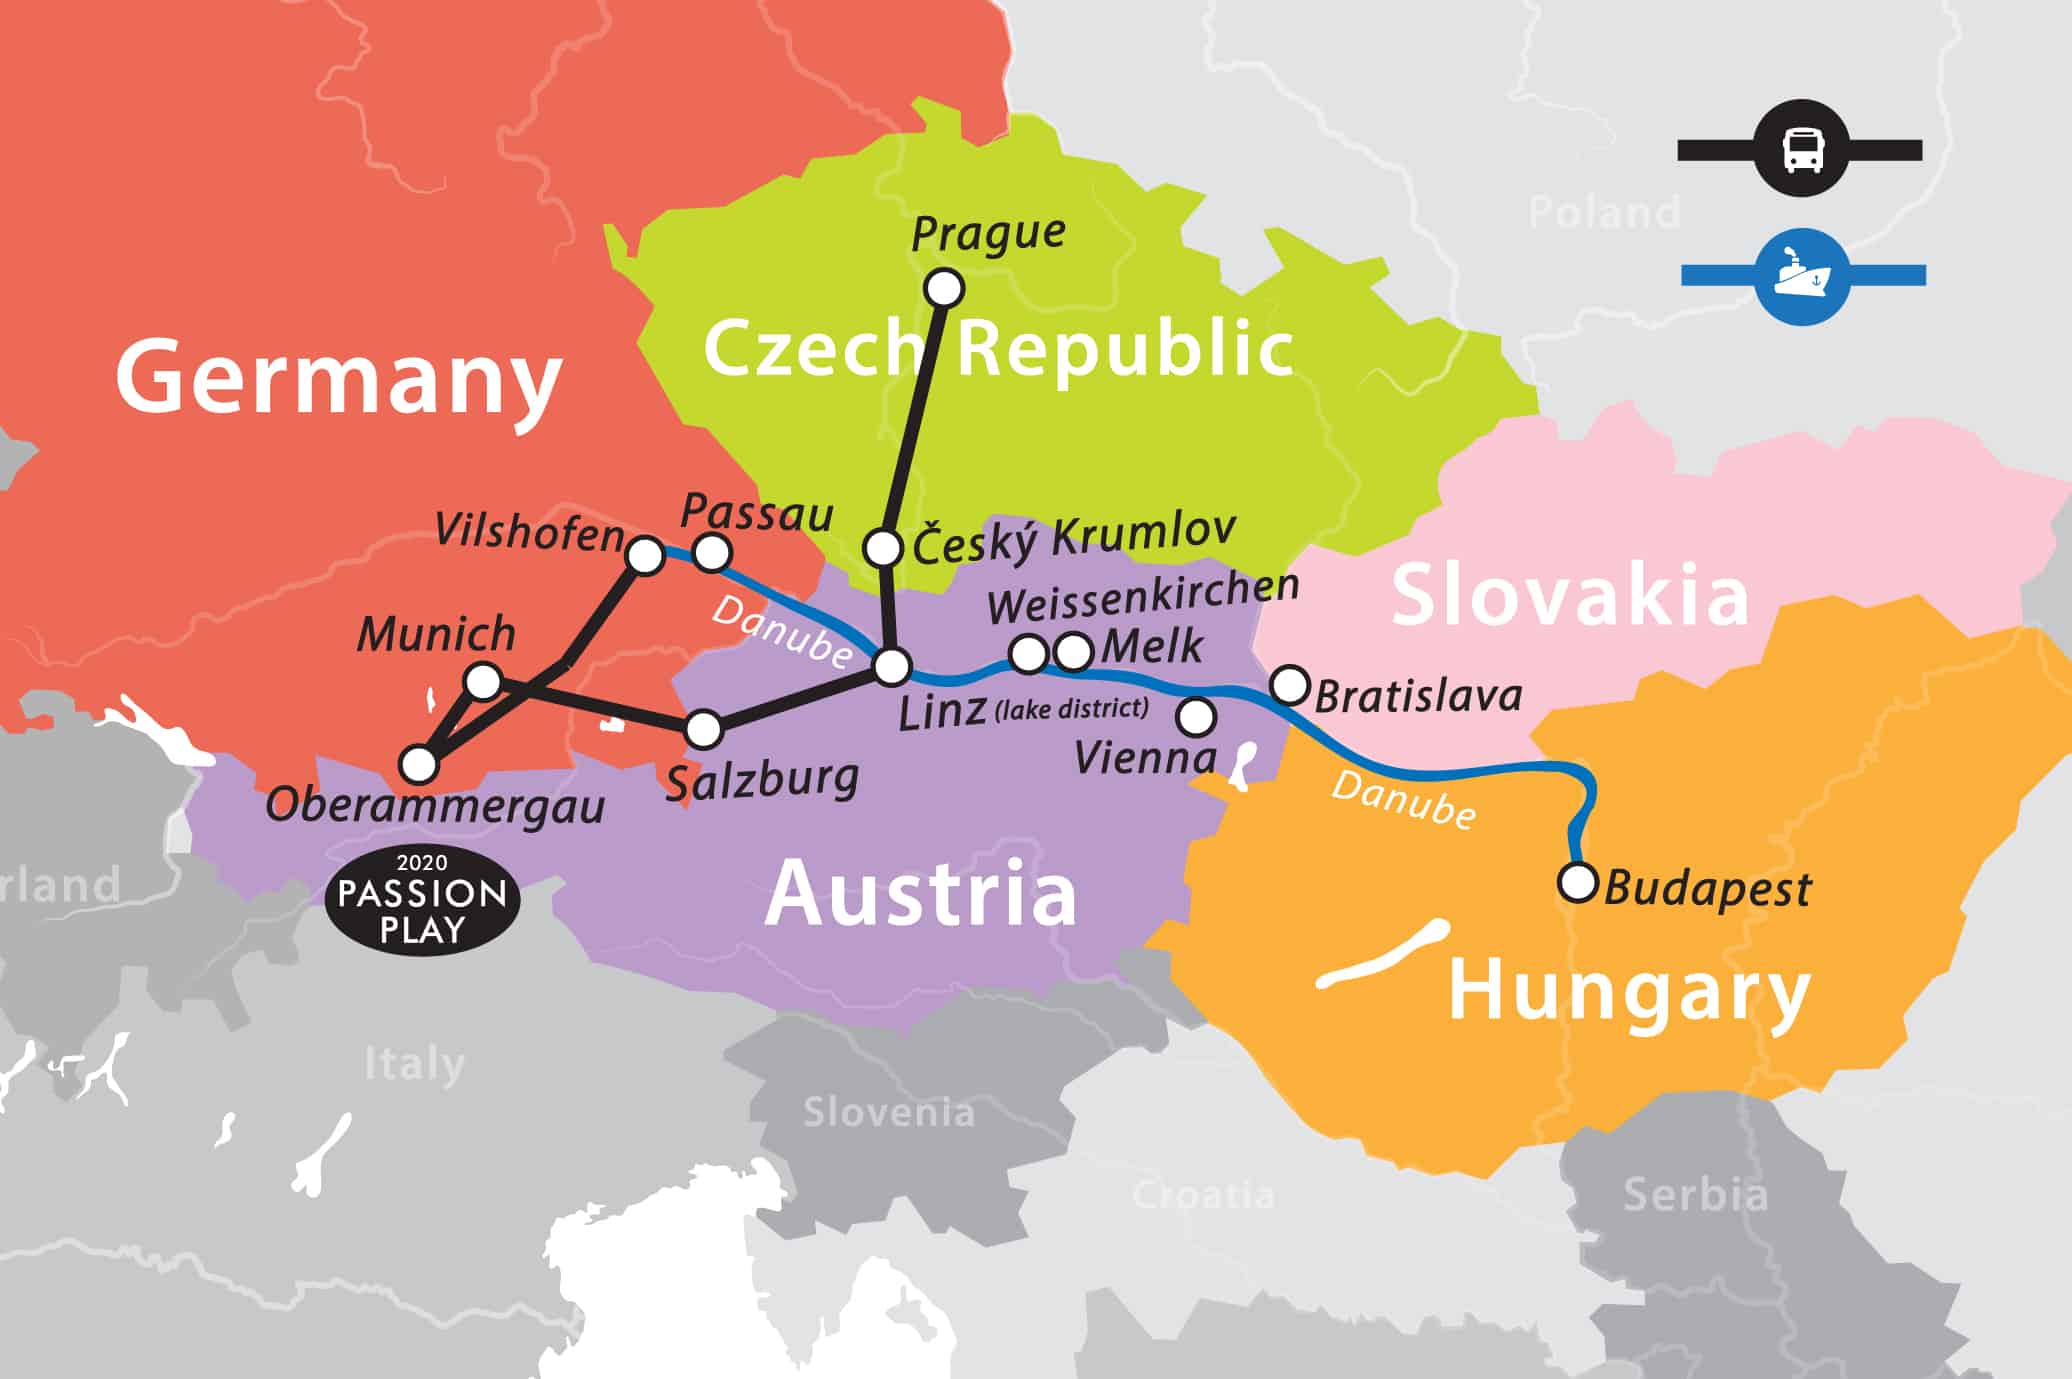 Danube River World Map